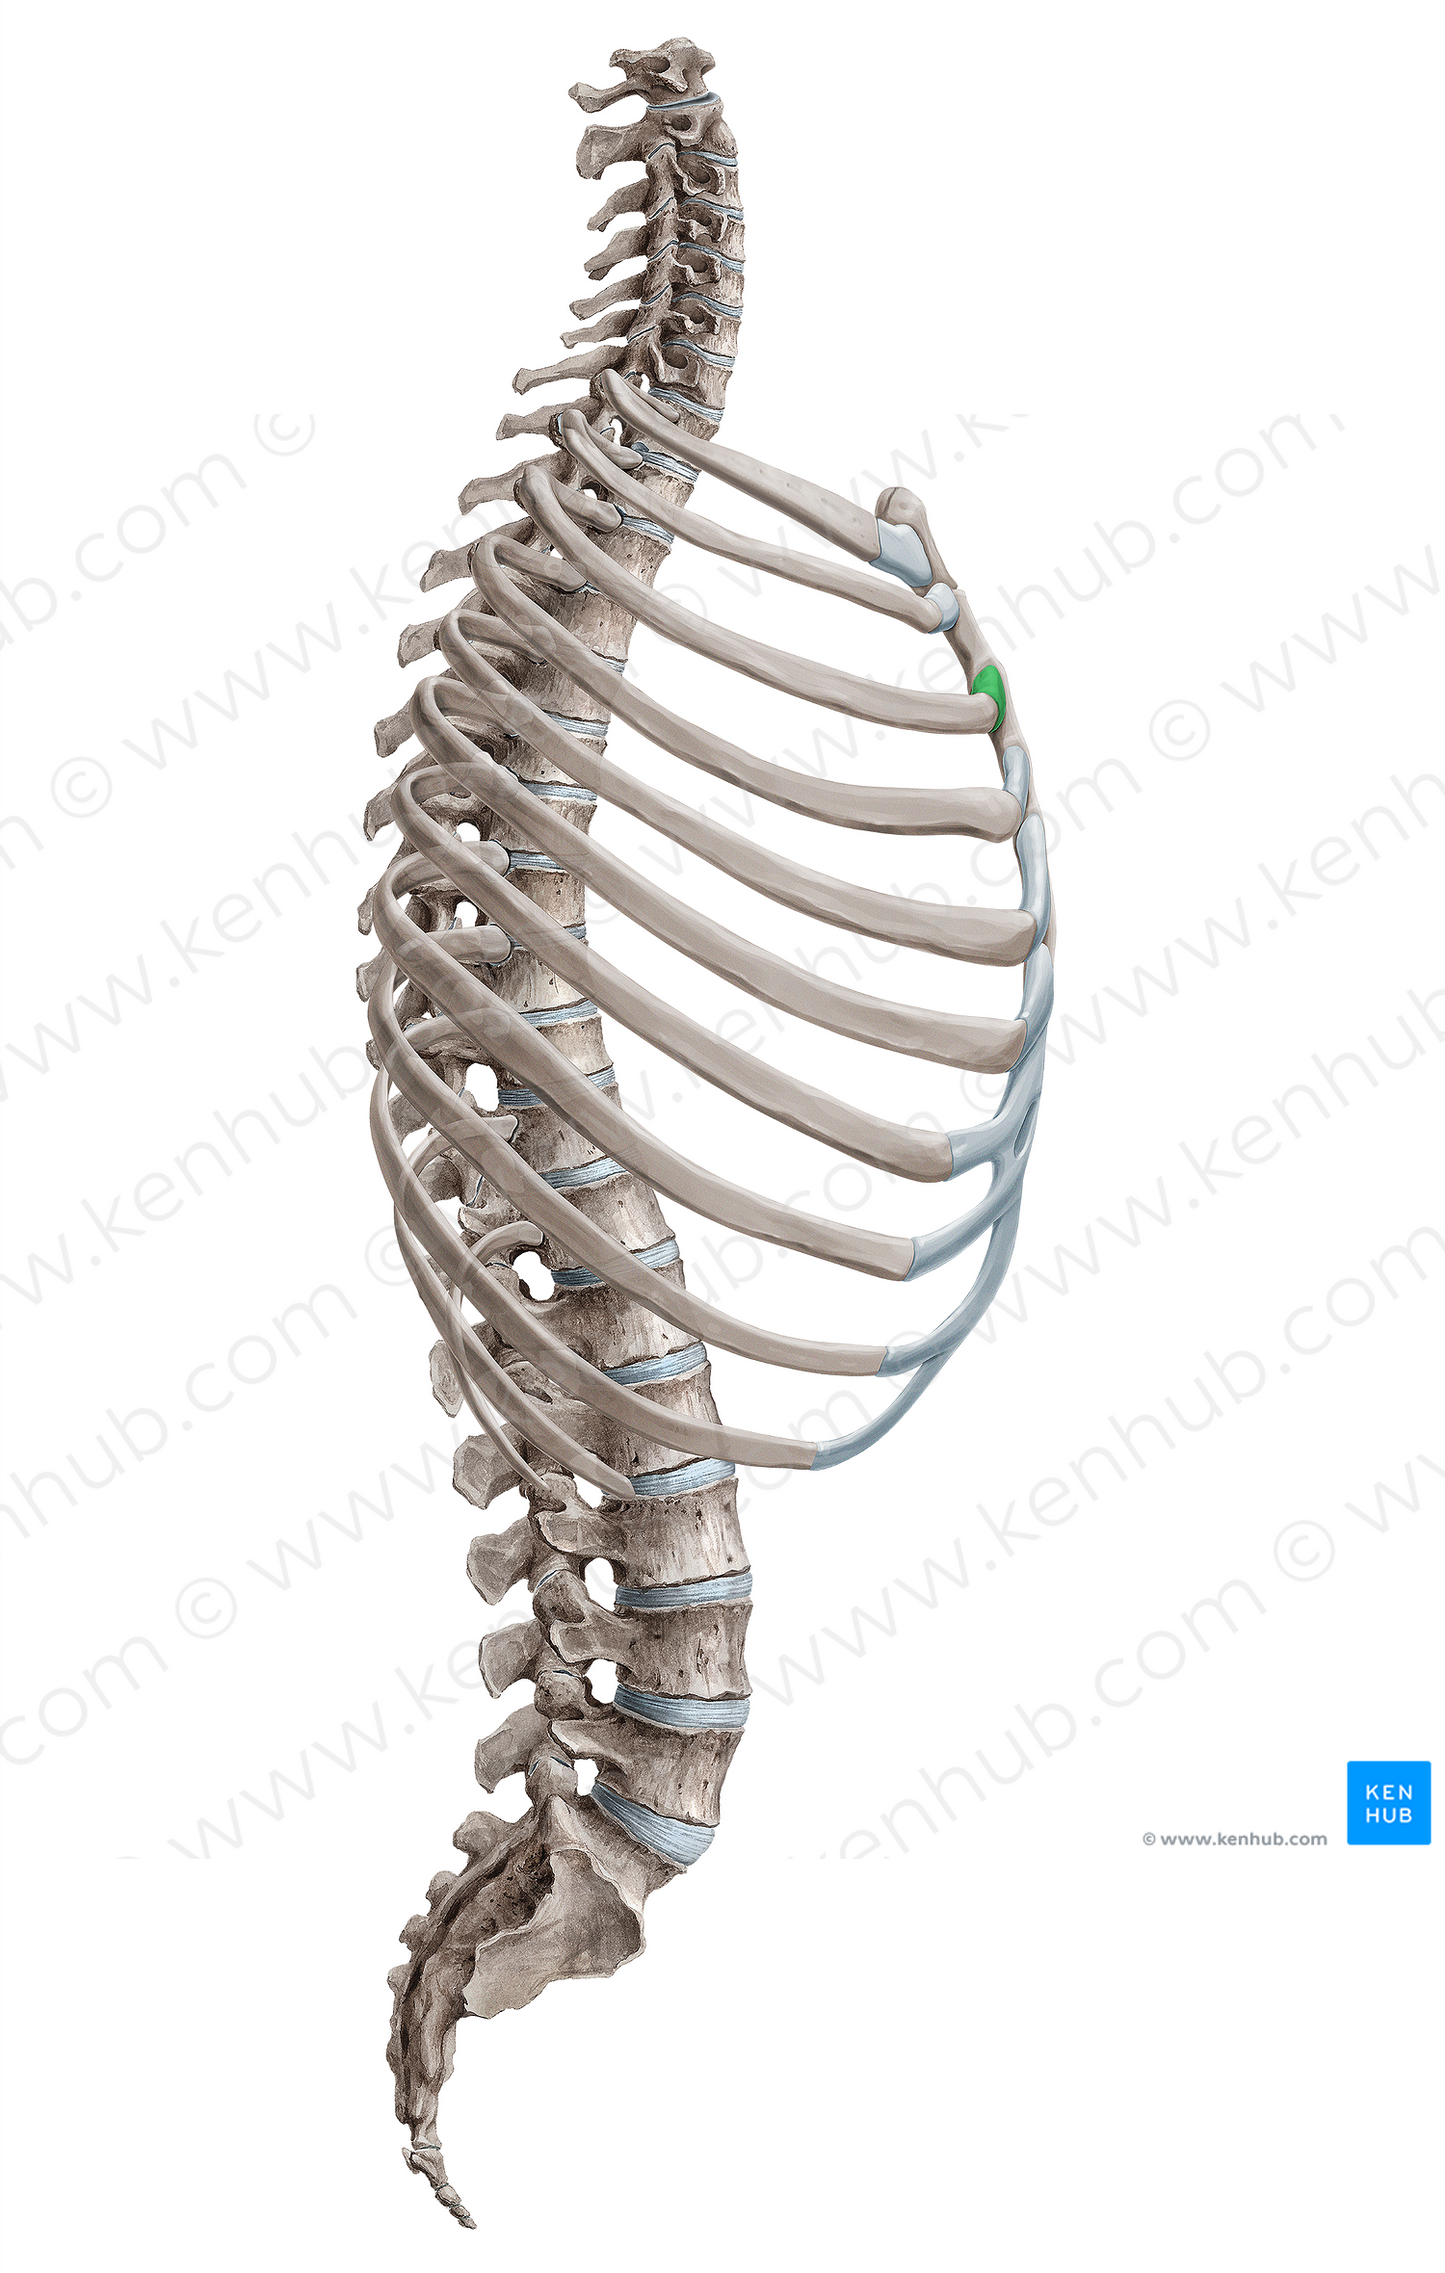 Costal cartilage of 3rd rib (#18154)